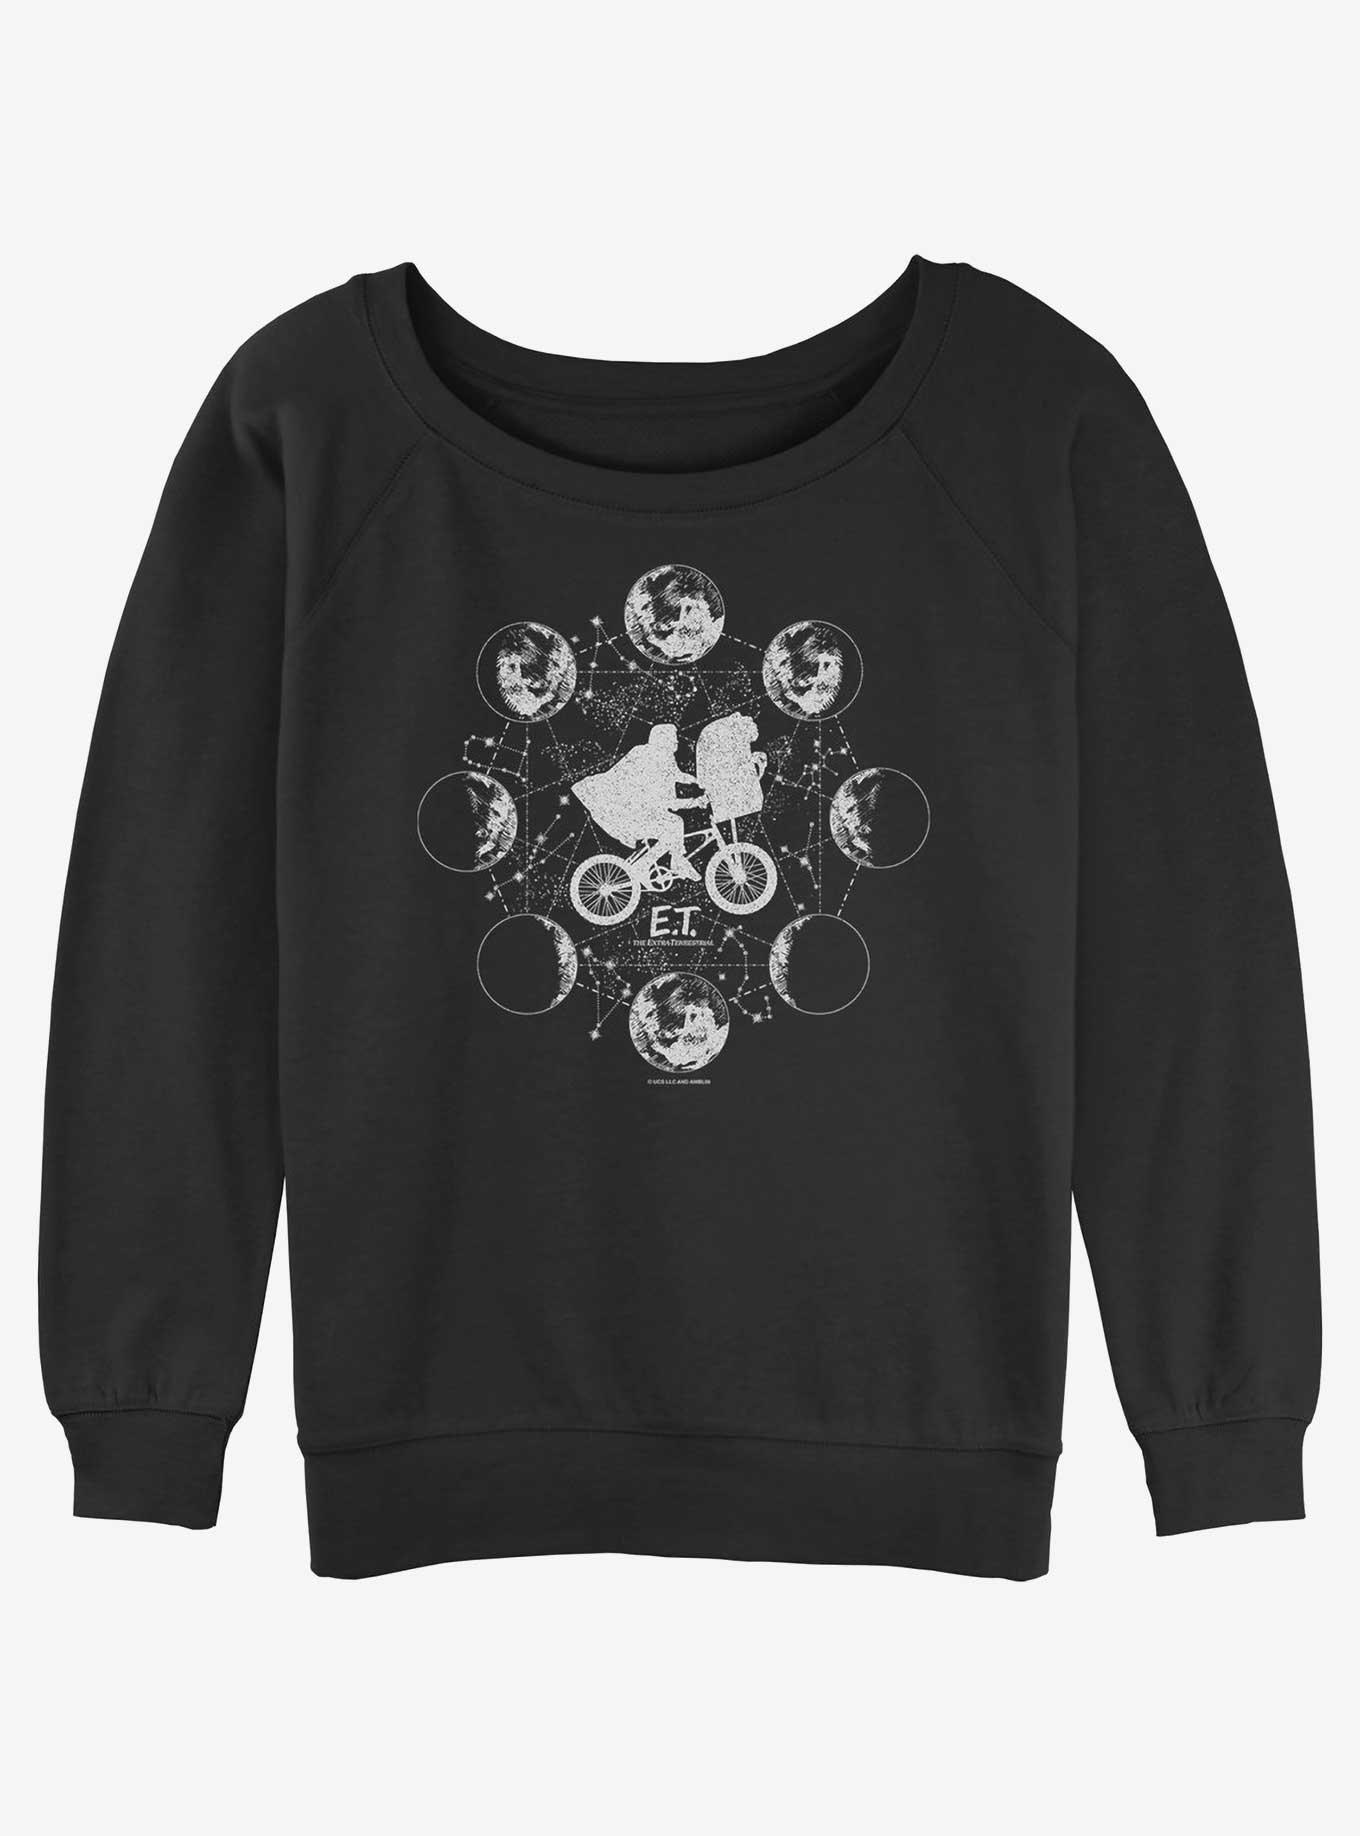 E.T. Lunar Girls Slouchy Sweatshirt, BLACK, hi-res